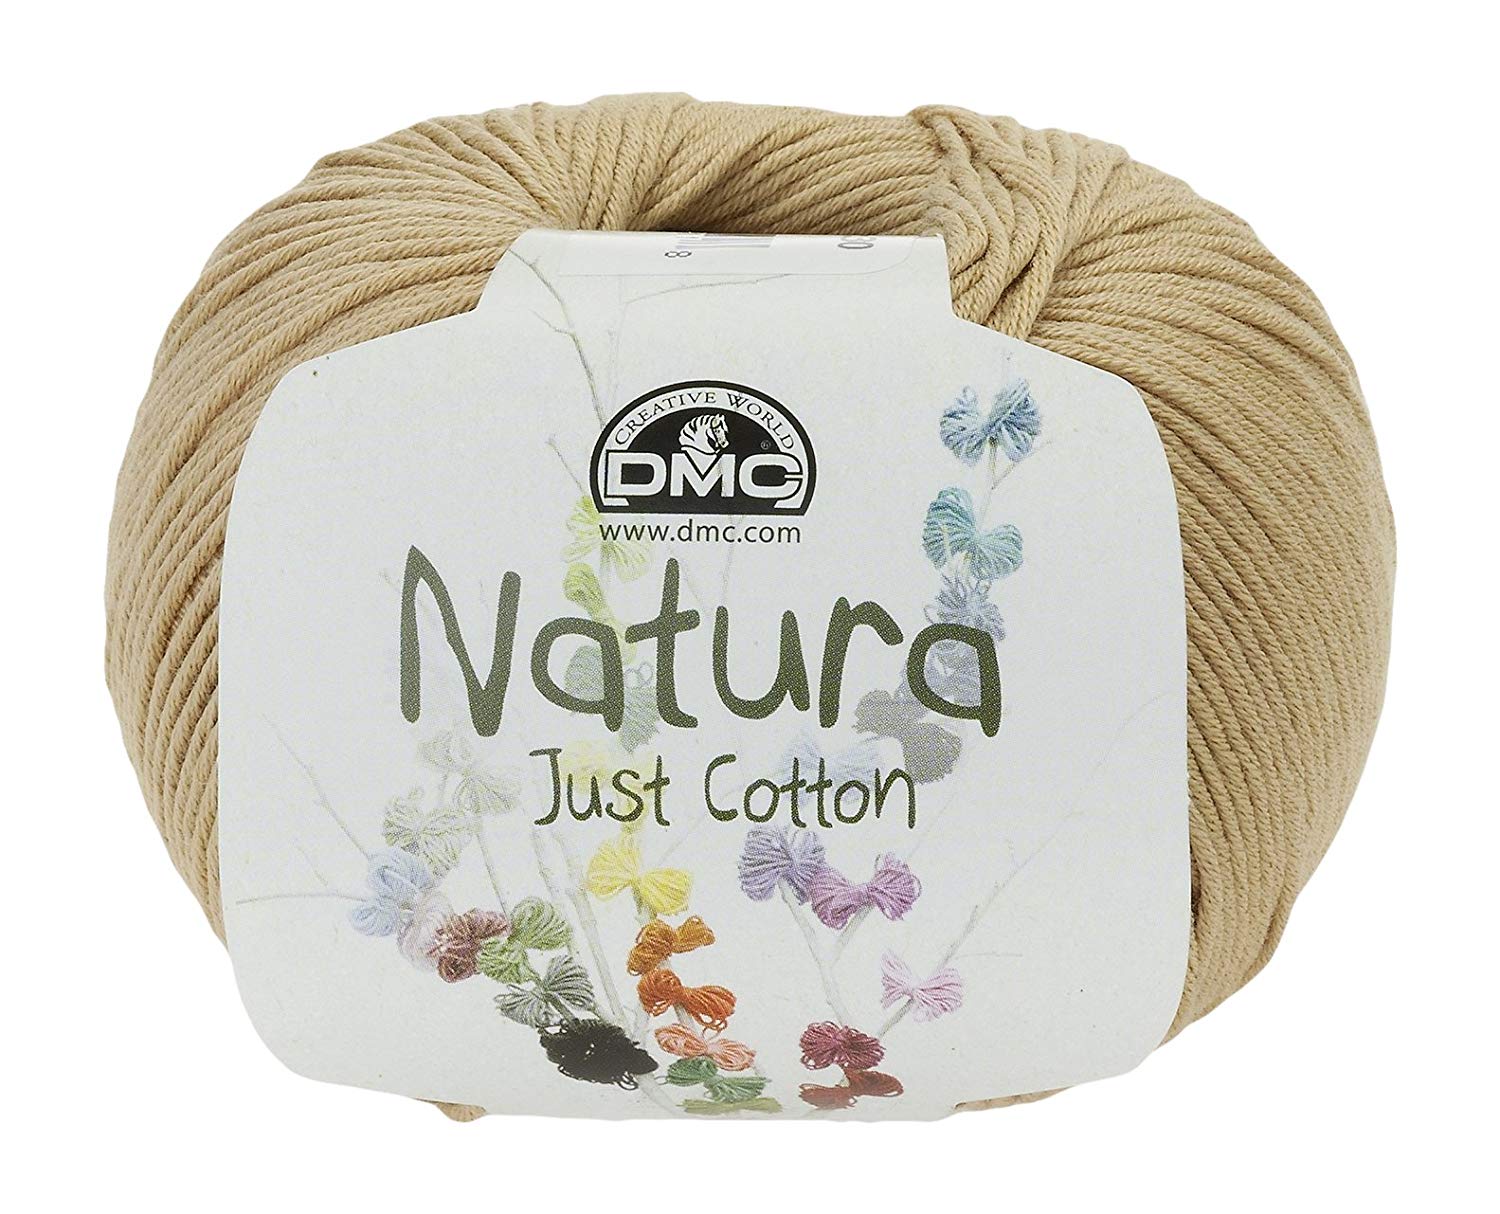 Пряжа ДМС. Natura Cotton 100 хлопок. DMC 52. DMC 993. Пряжа Naturafil логотип.